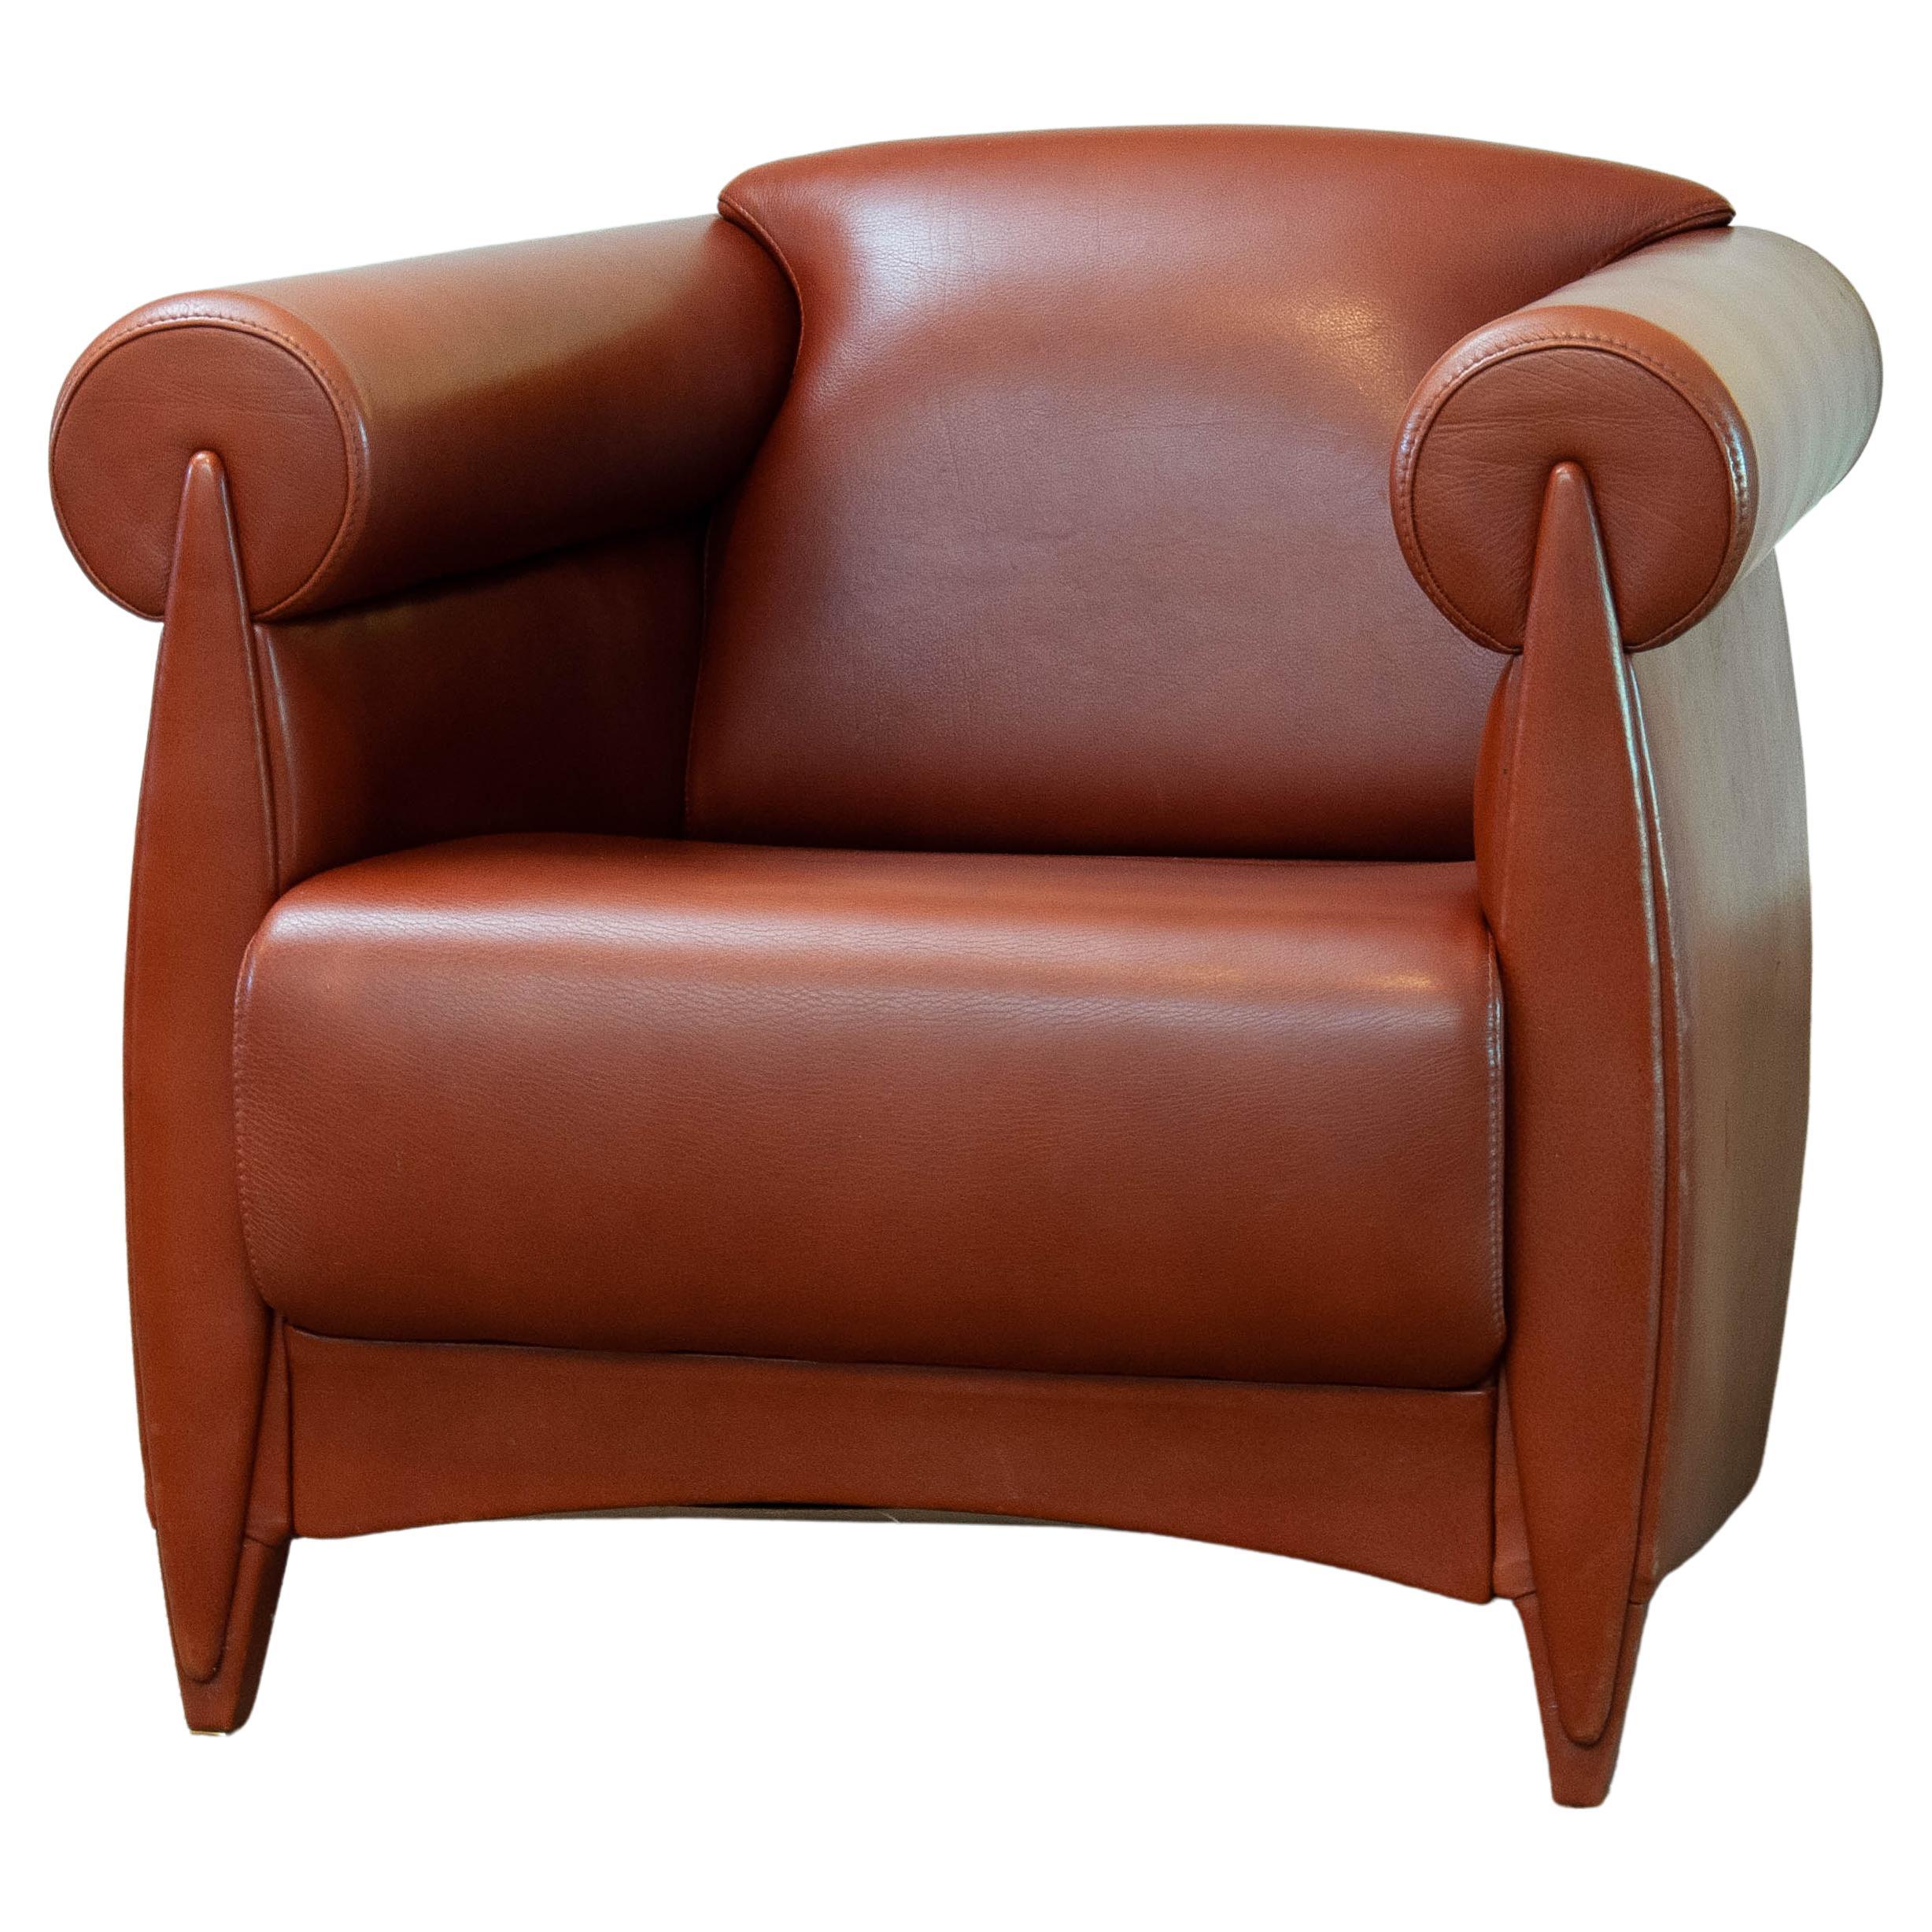 1980s Modern Lounge / Club Chair in Cognac Leather by Klaus Wettergren Denmark